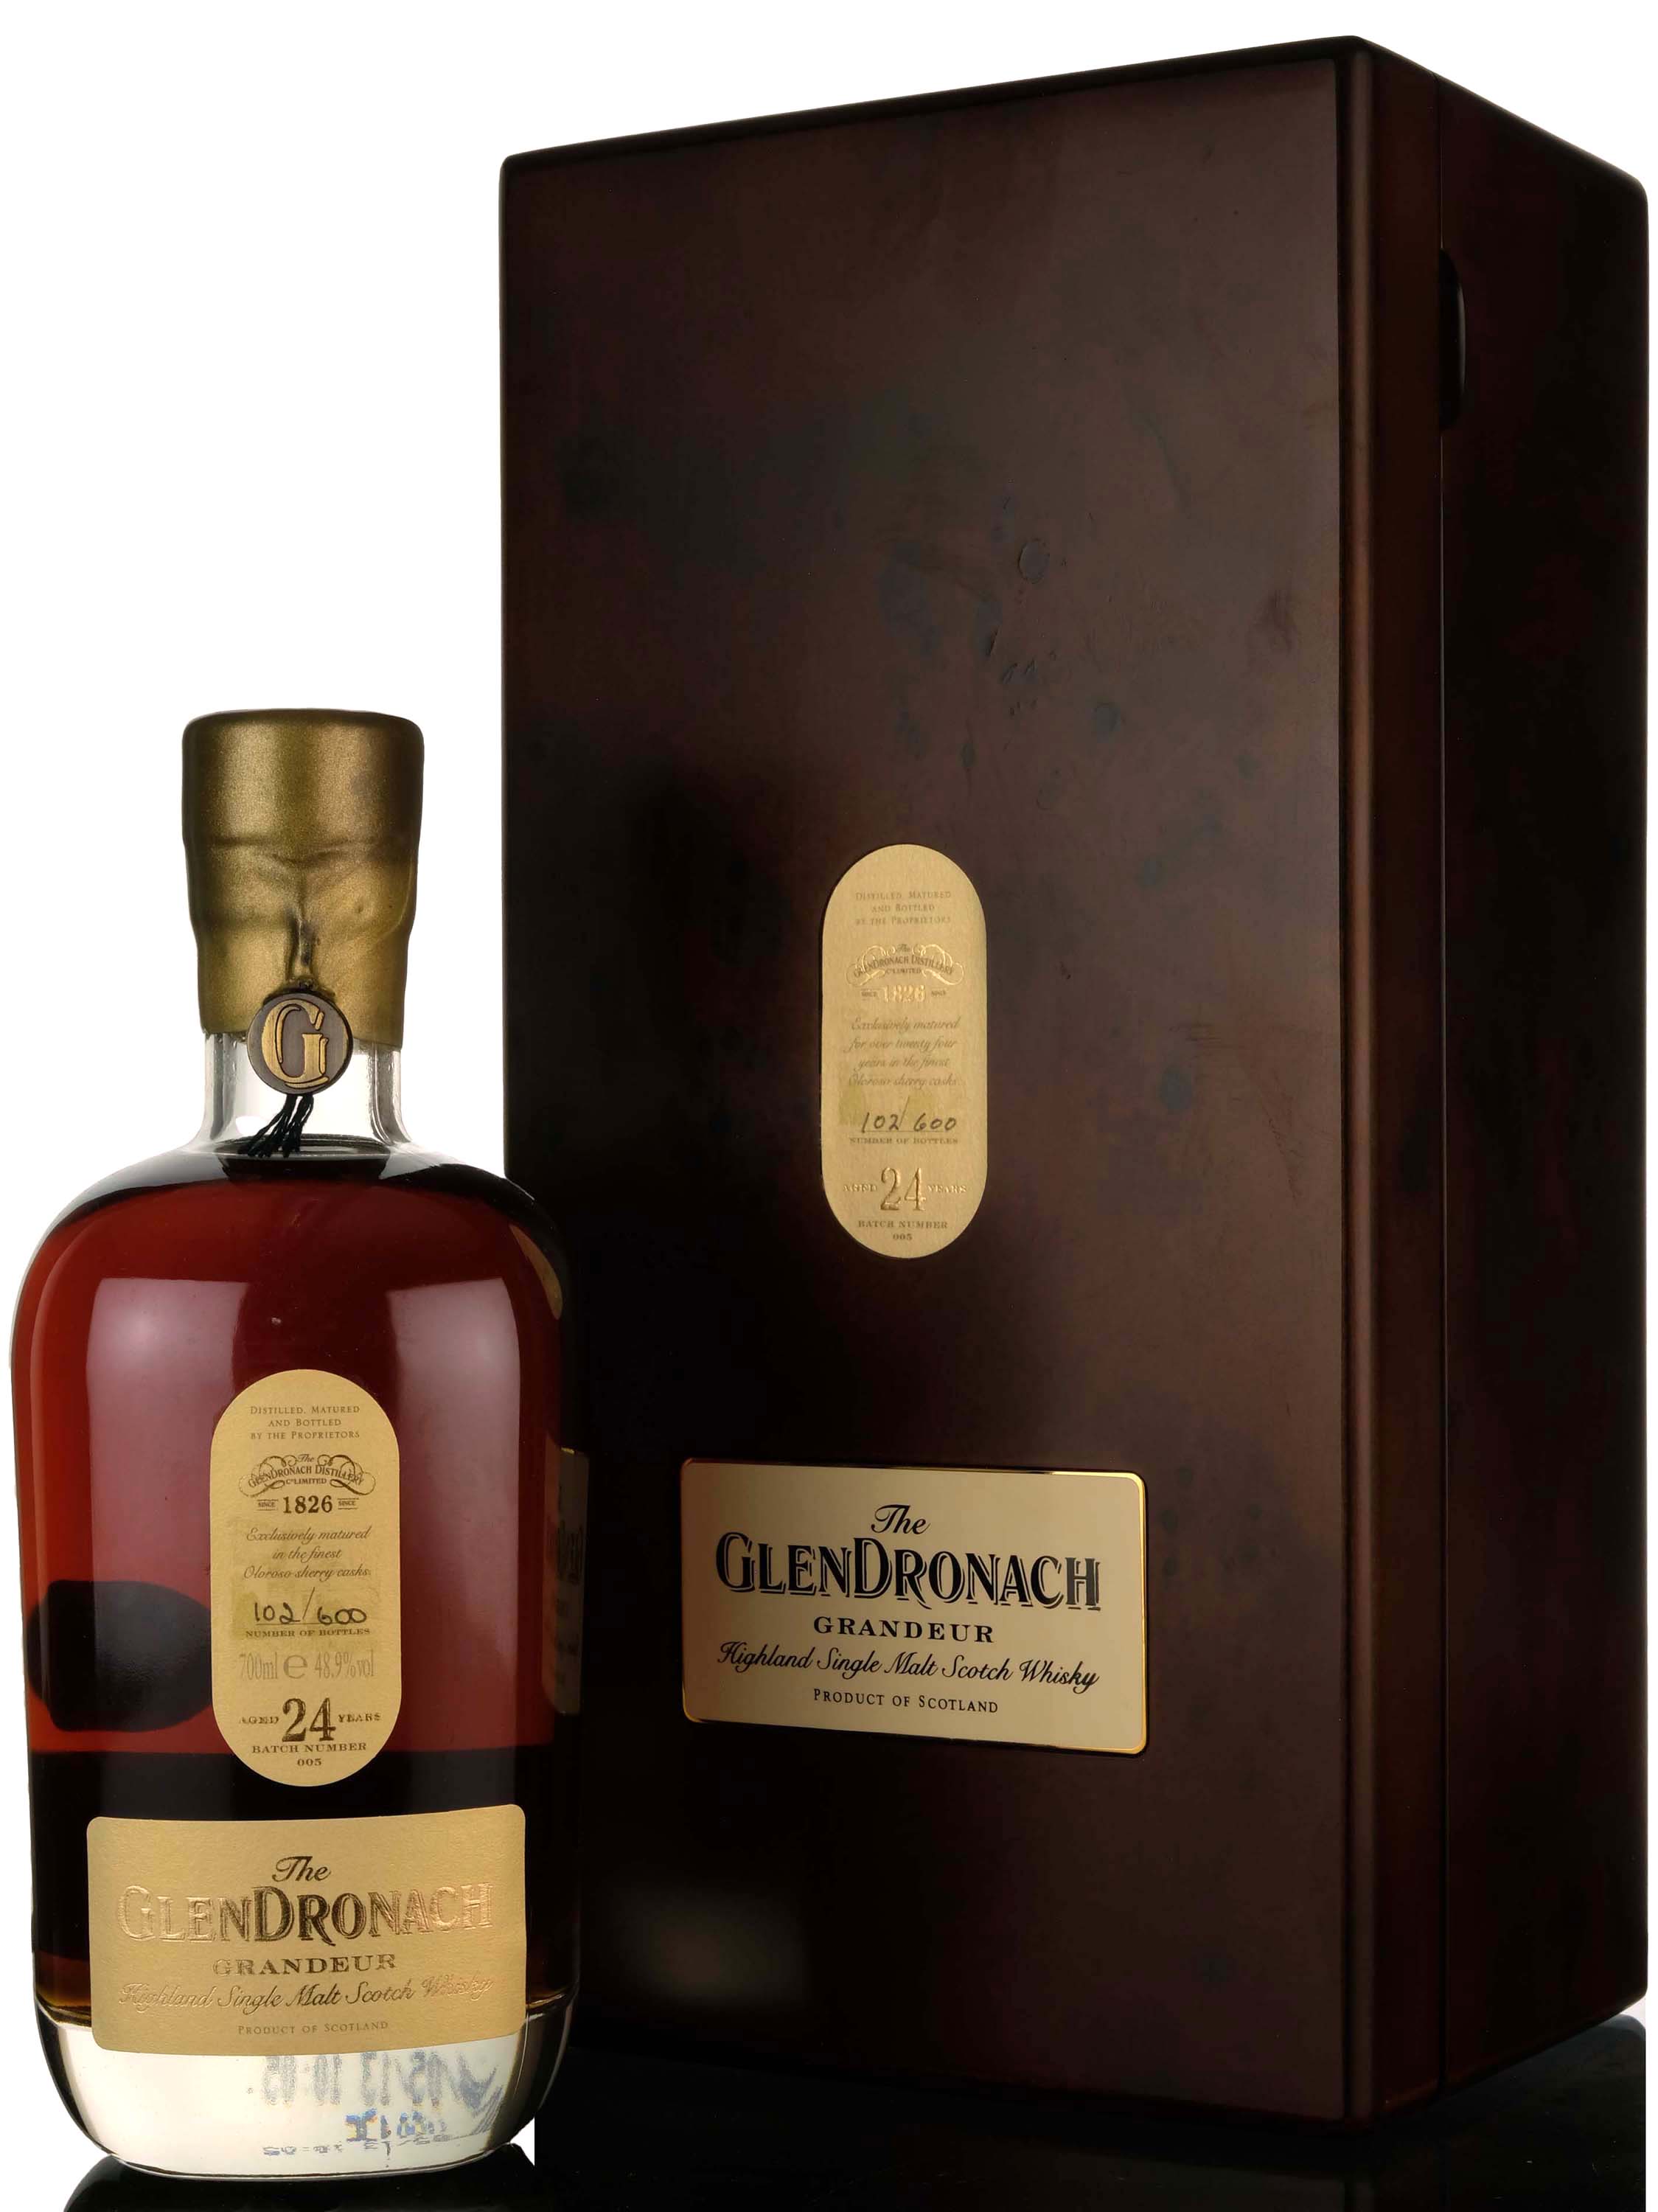 Glendronach 24 Year Old - Grandeur Batch 5 - 2014 Release